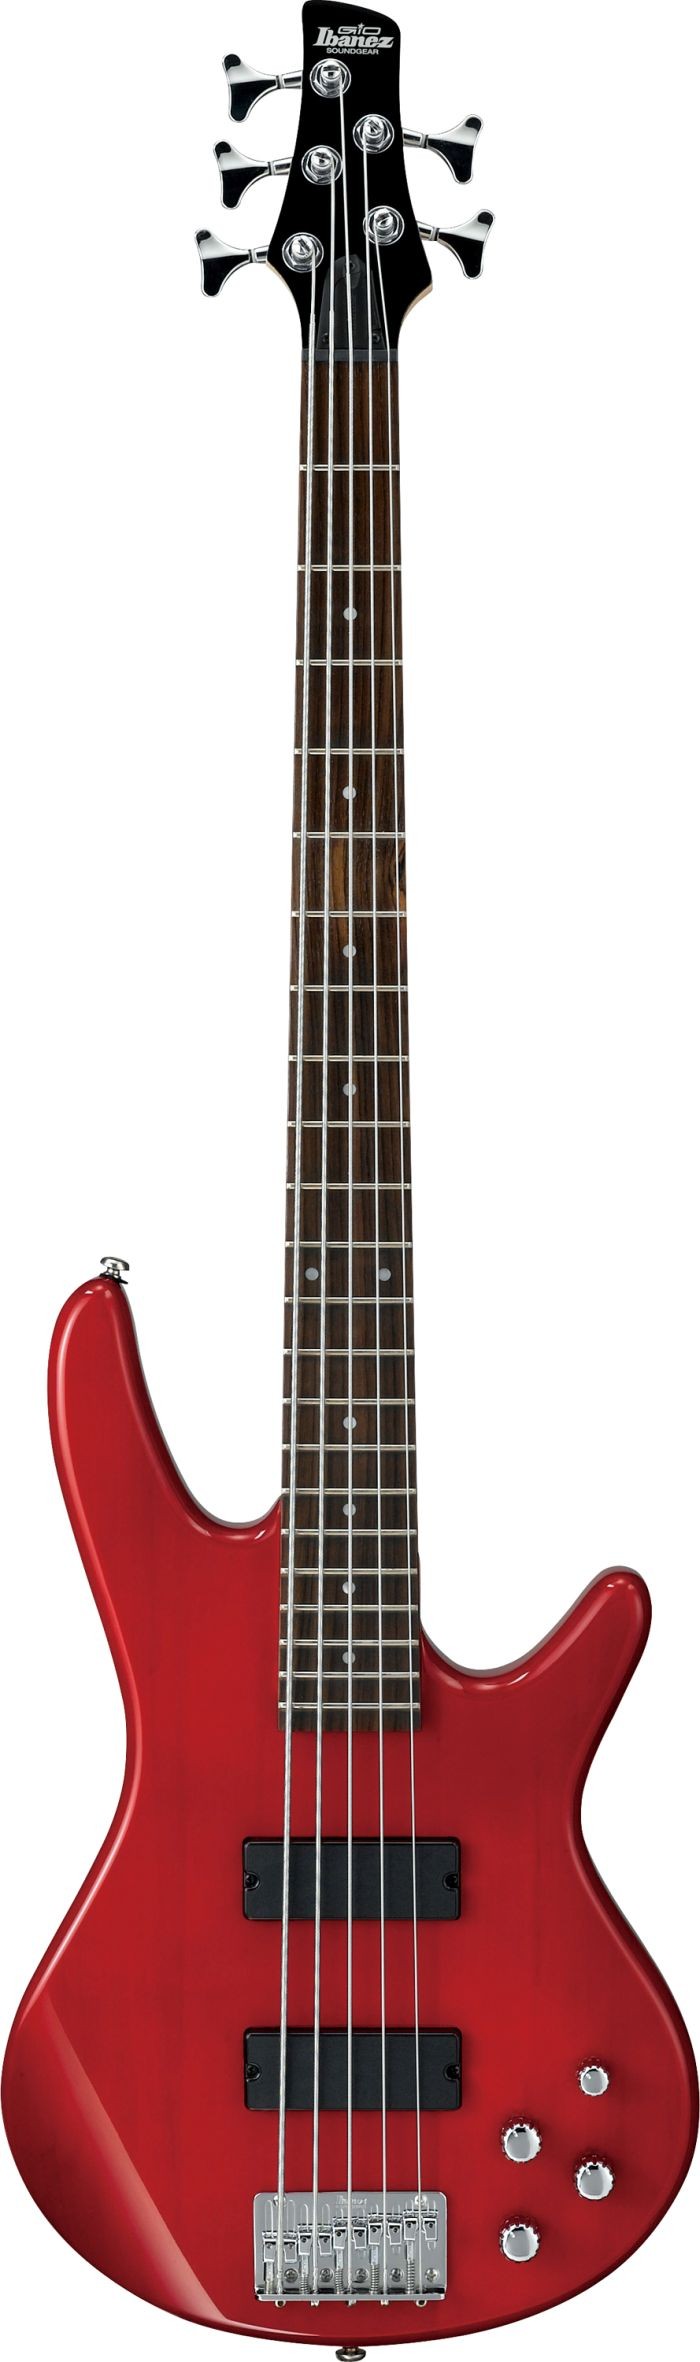 Ibanez SR205 TR 5 String Bass Guitar Transparent Red 2019